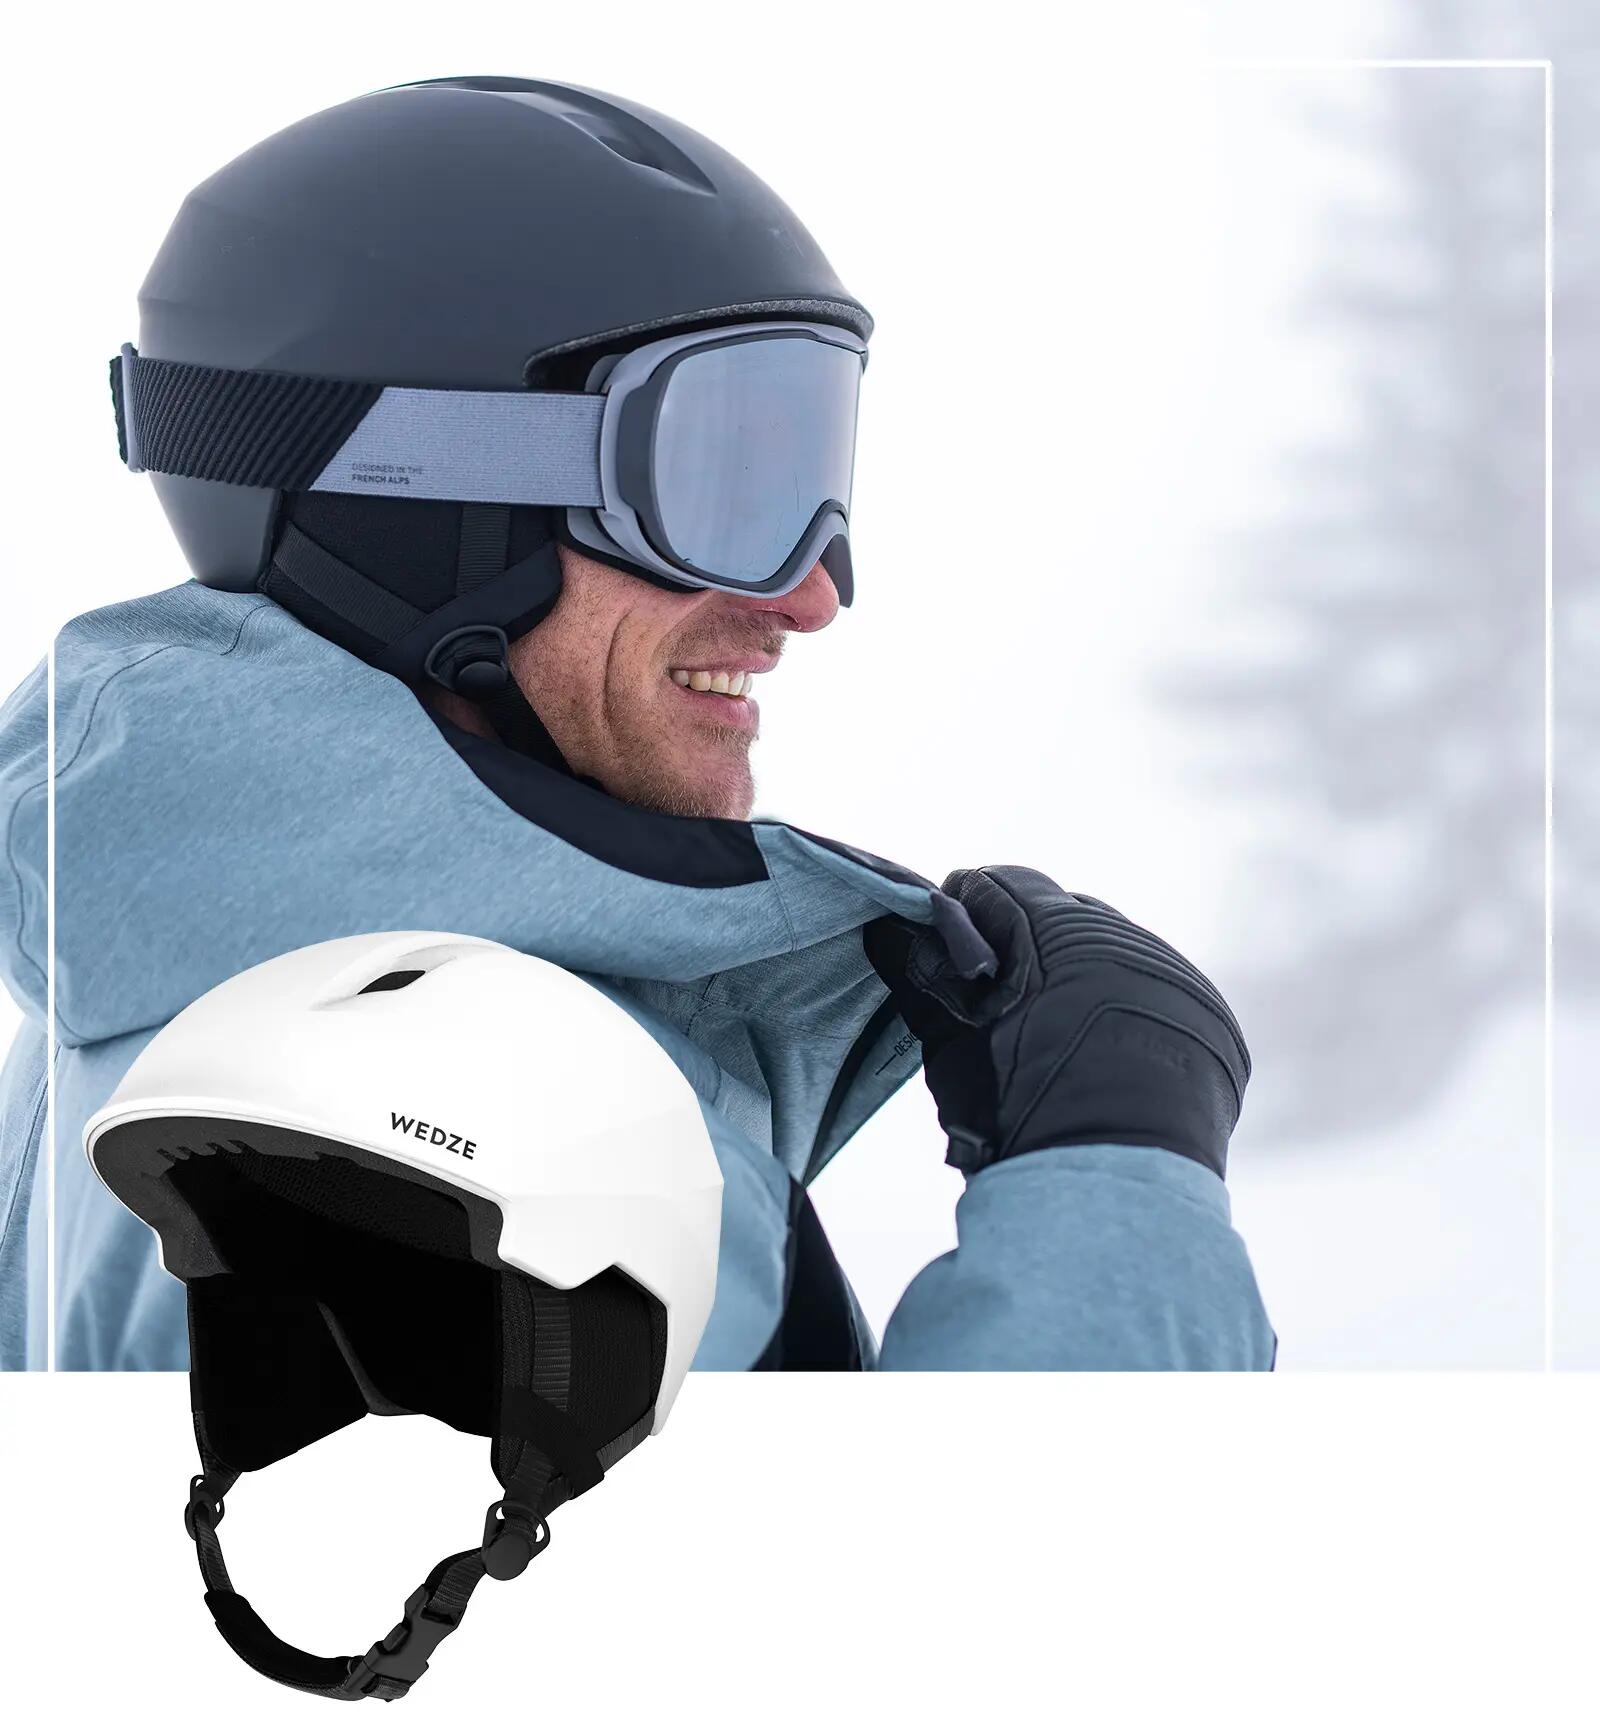 Man wearing  a ski helmet with a visor.